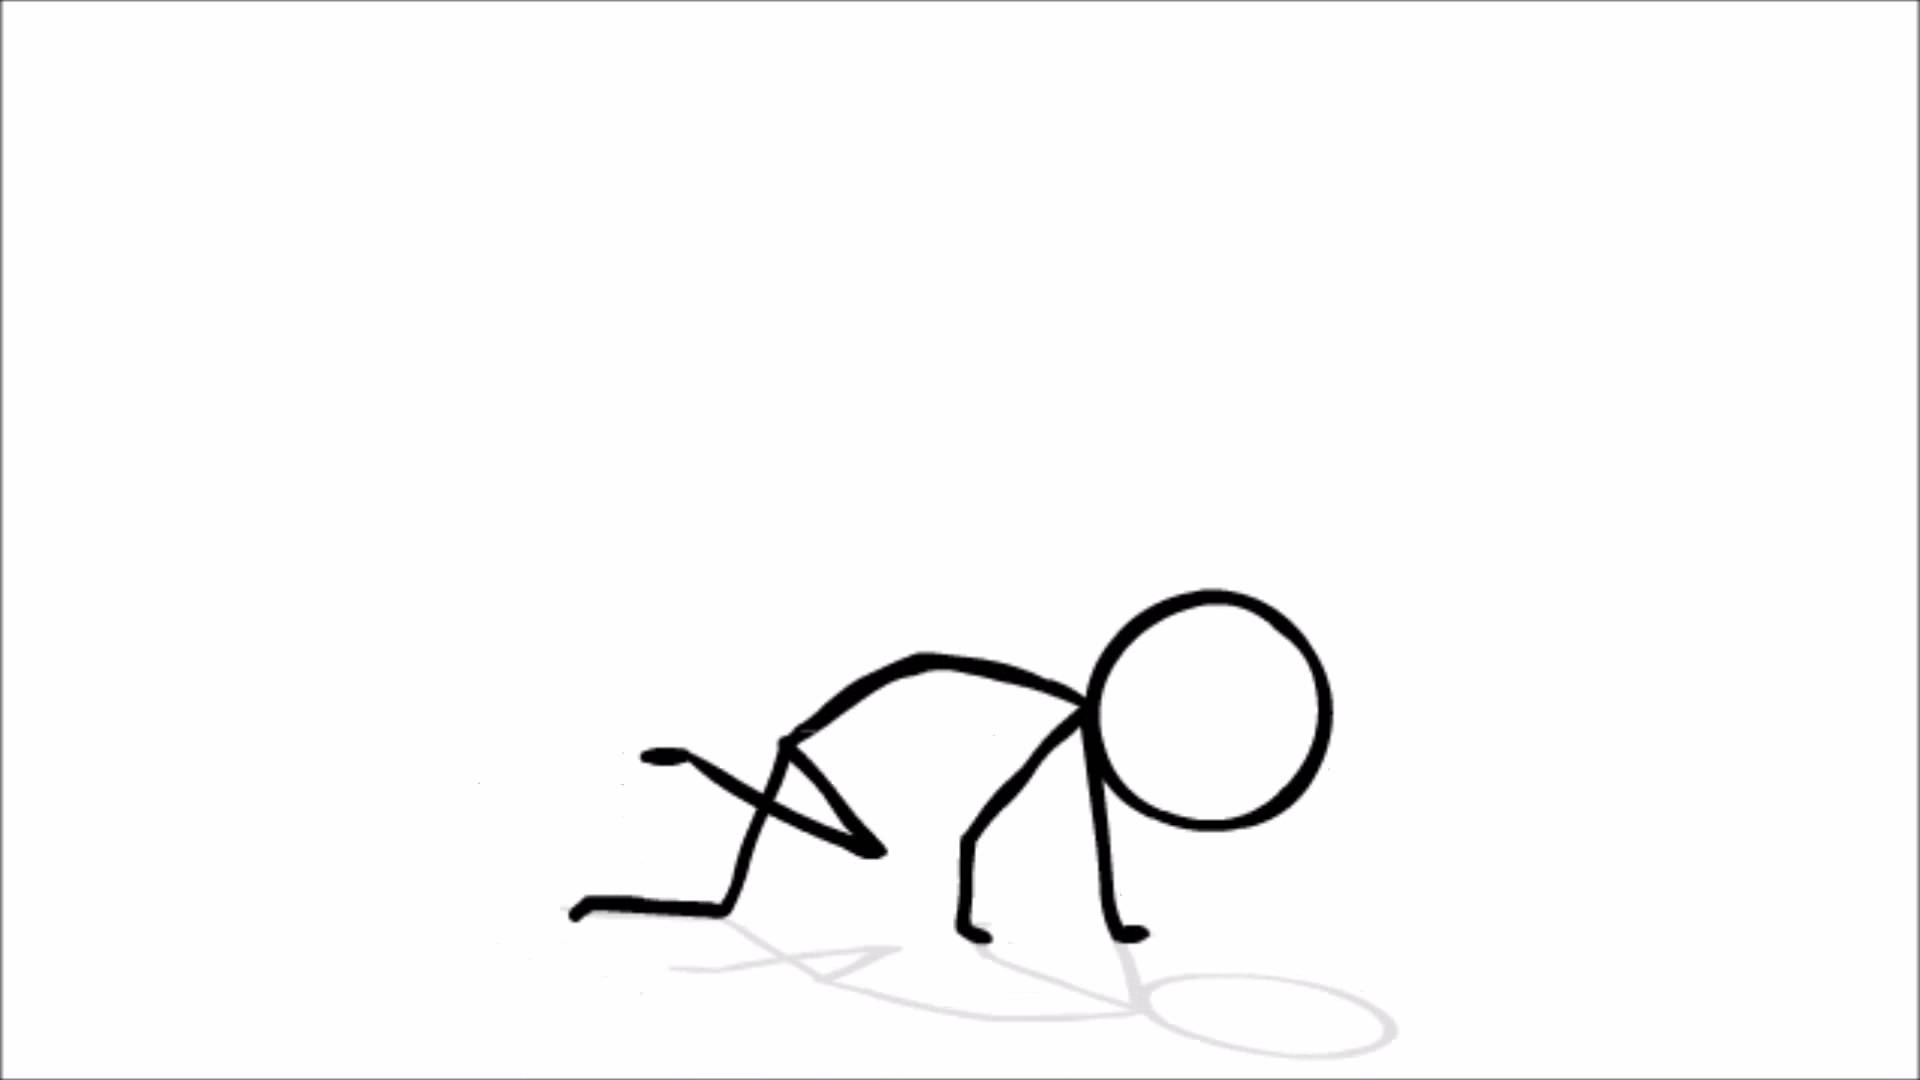 Stick Figure Animation Test - YouTube